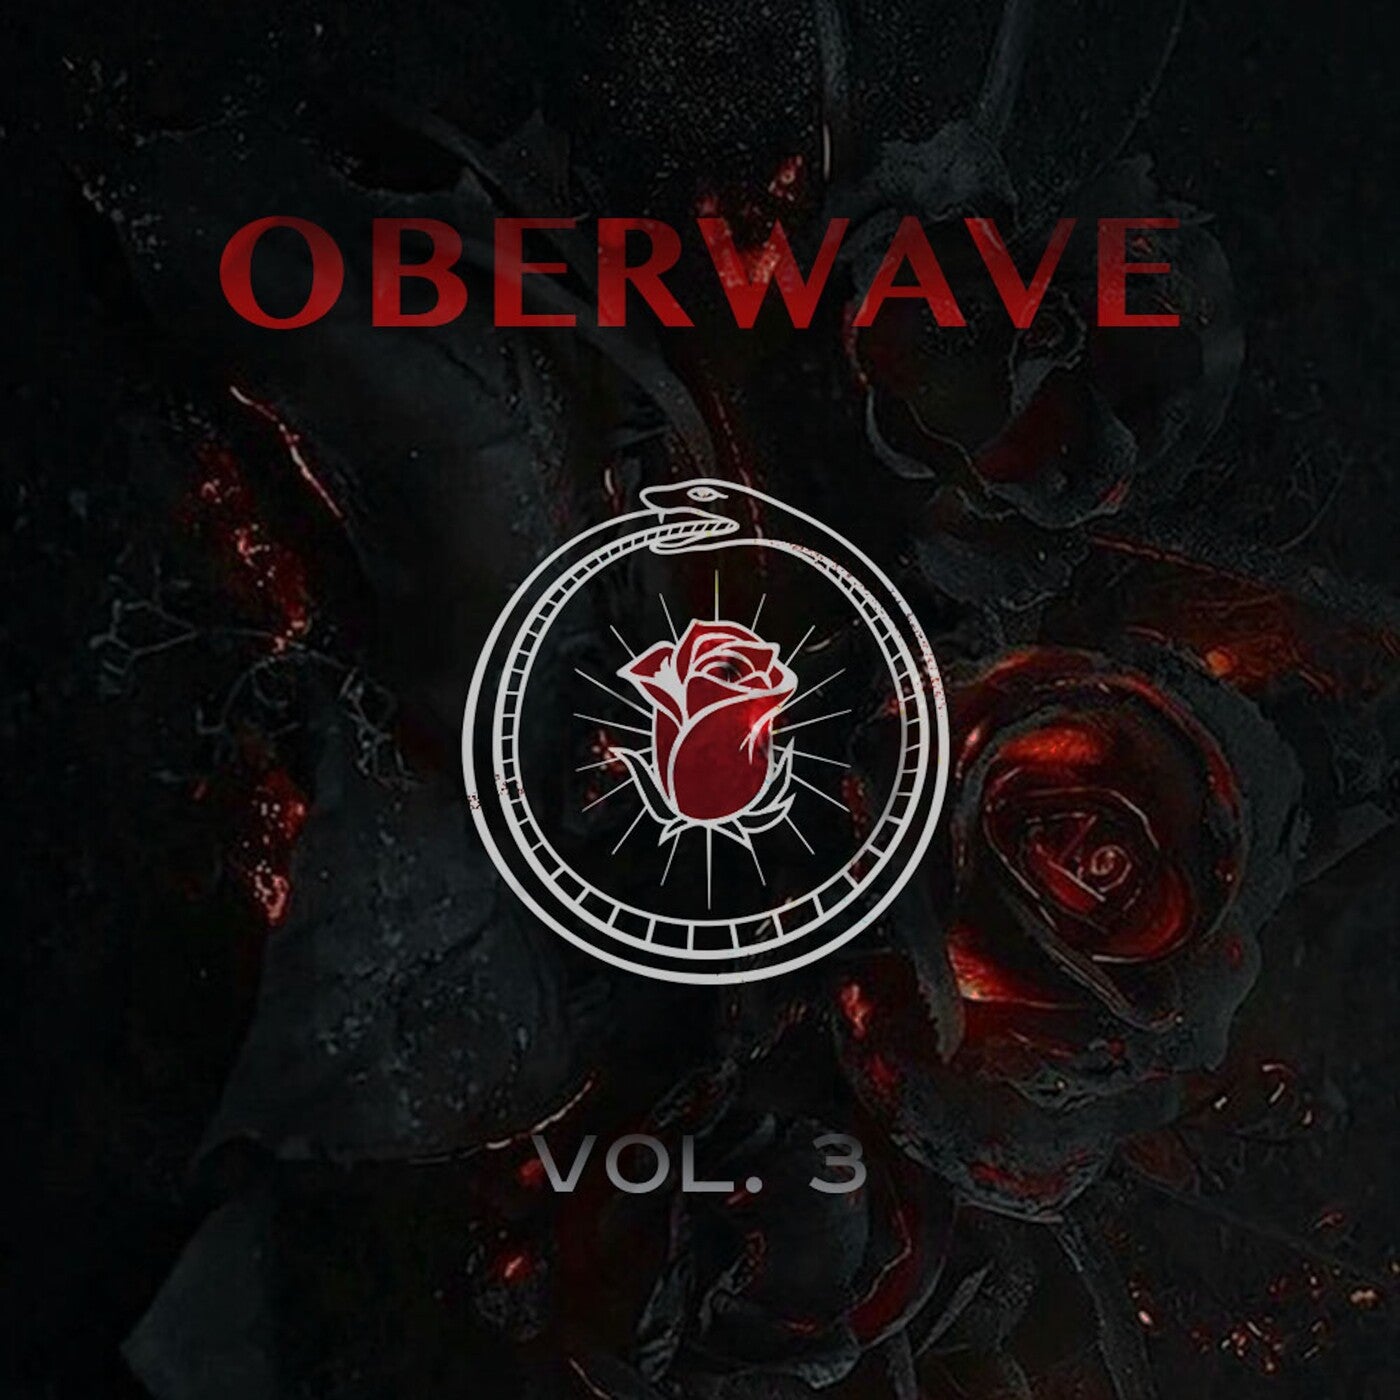 Oberwave Vol. 3